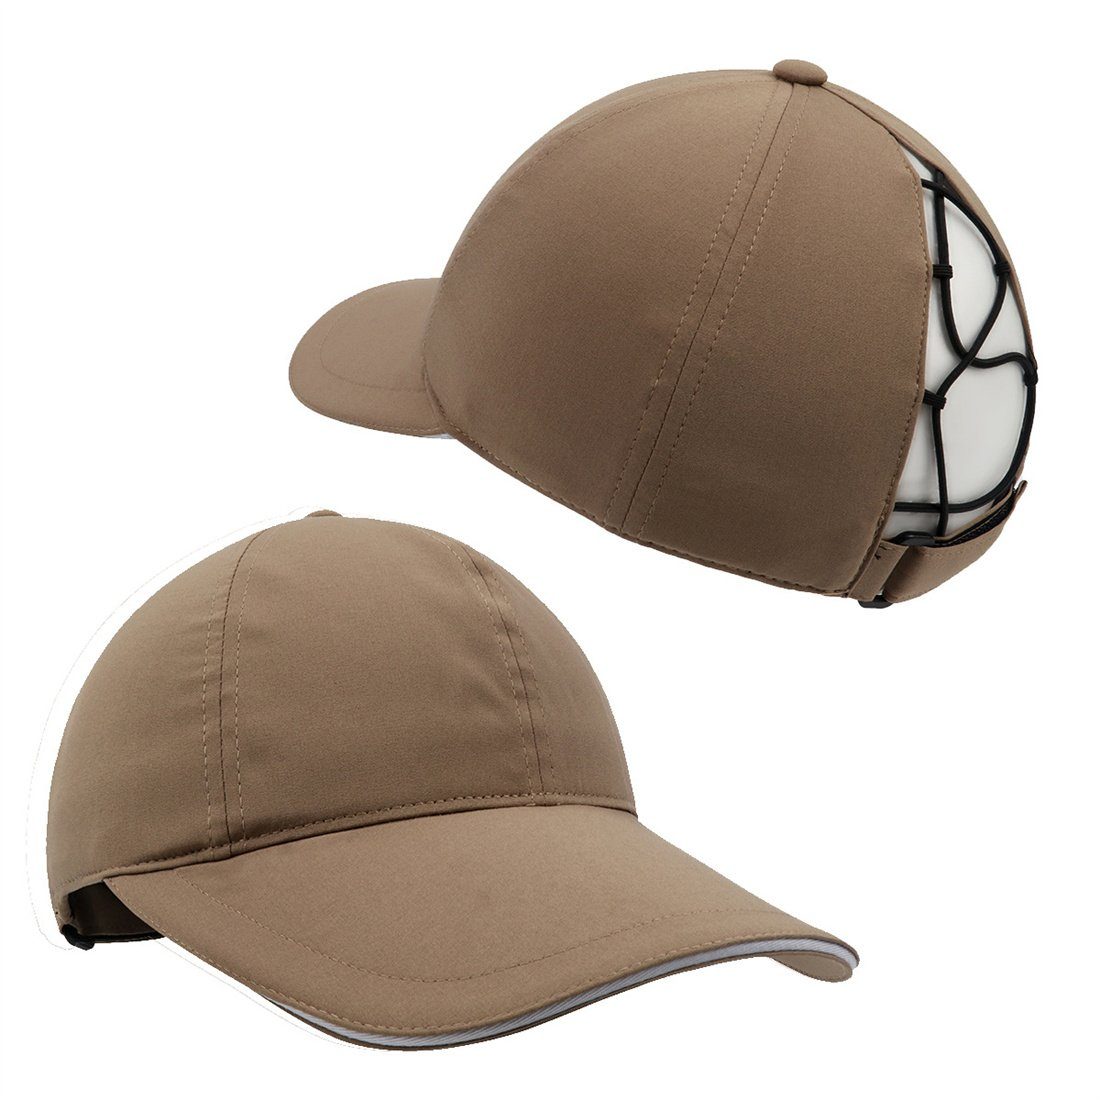 DÖRÖY Baseball Cap Outdoor-Baseballkappe für Frauen,schnell trocknende Kappe,Sonnenblende khaki | Baseball Caps